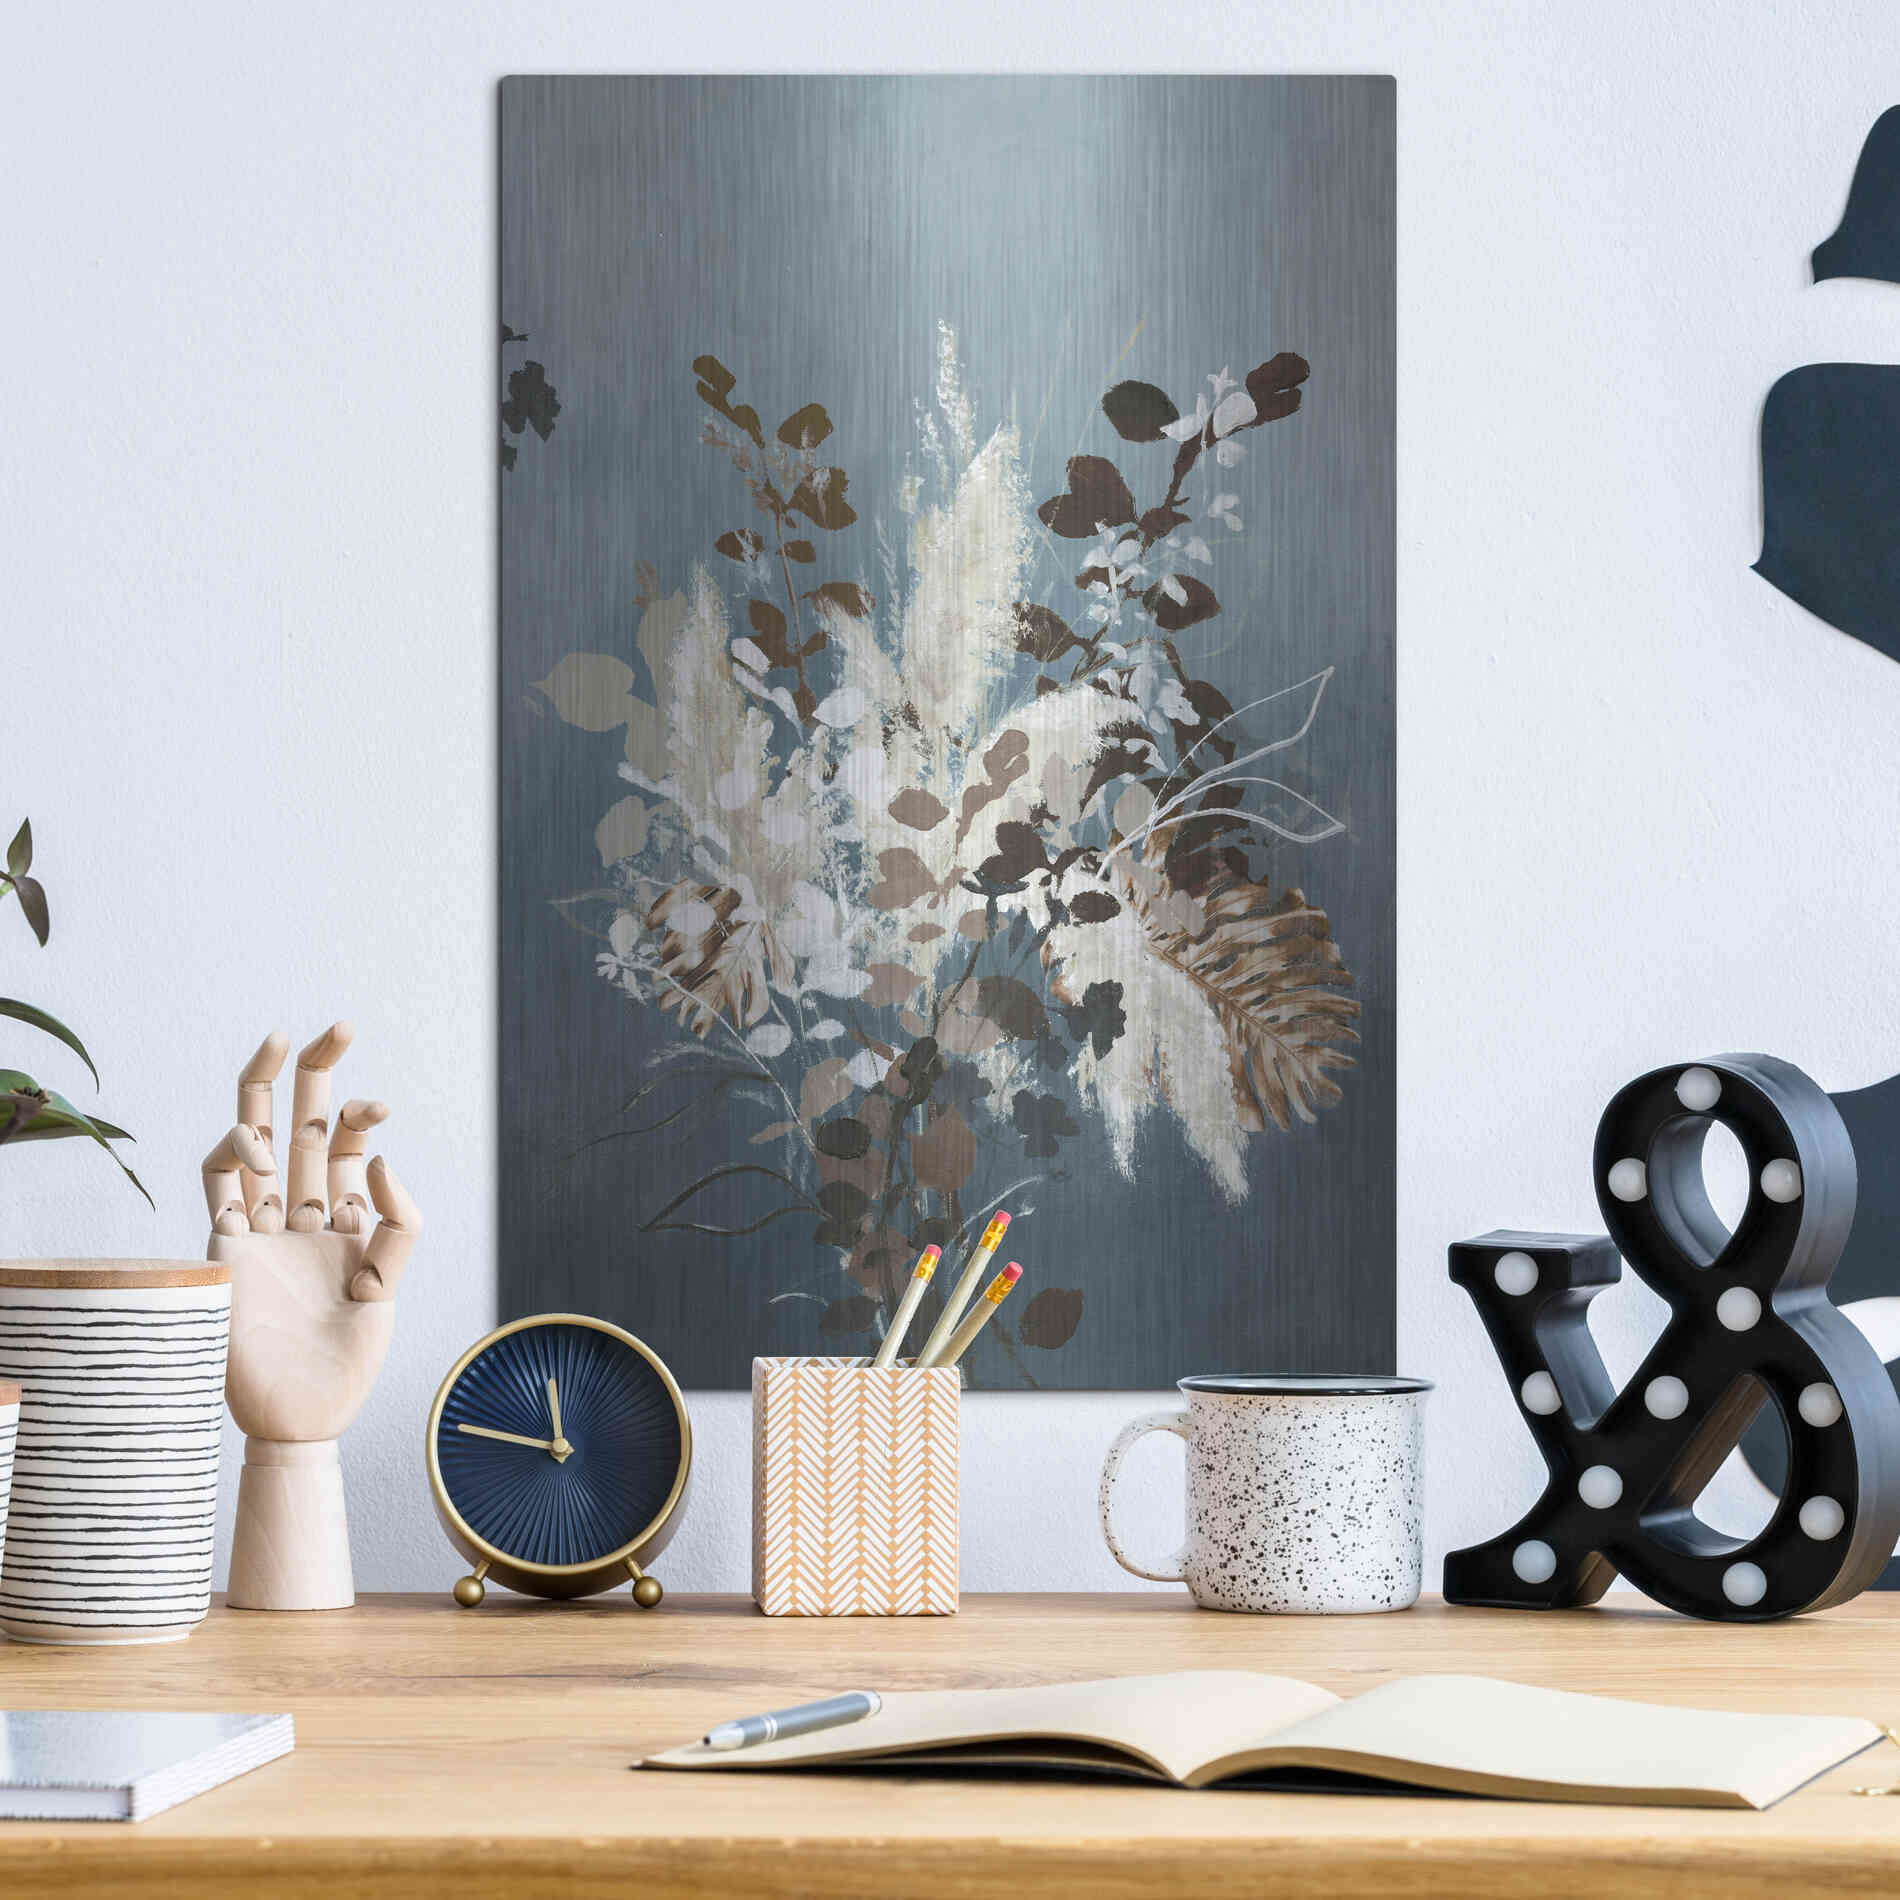 Luxe Metal Art 'Light Leaves 3' by Design Fabrikken, Metal Wall Art,12x16